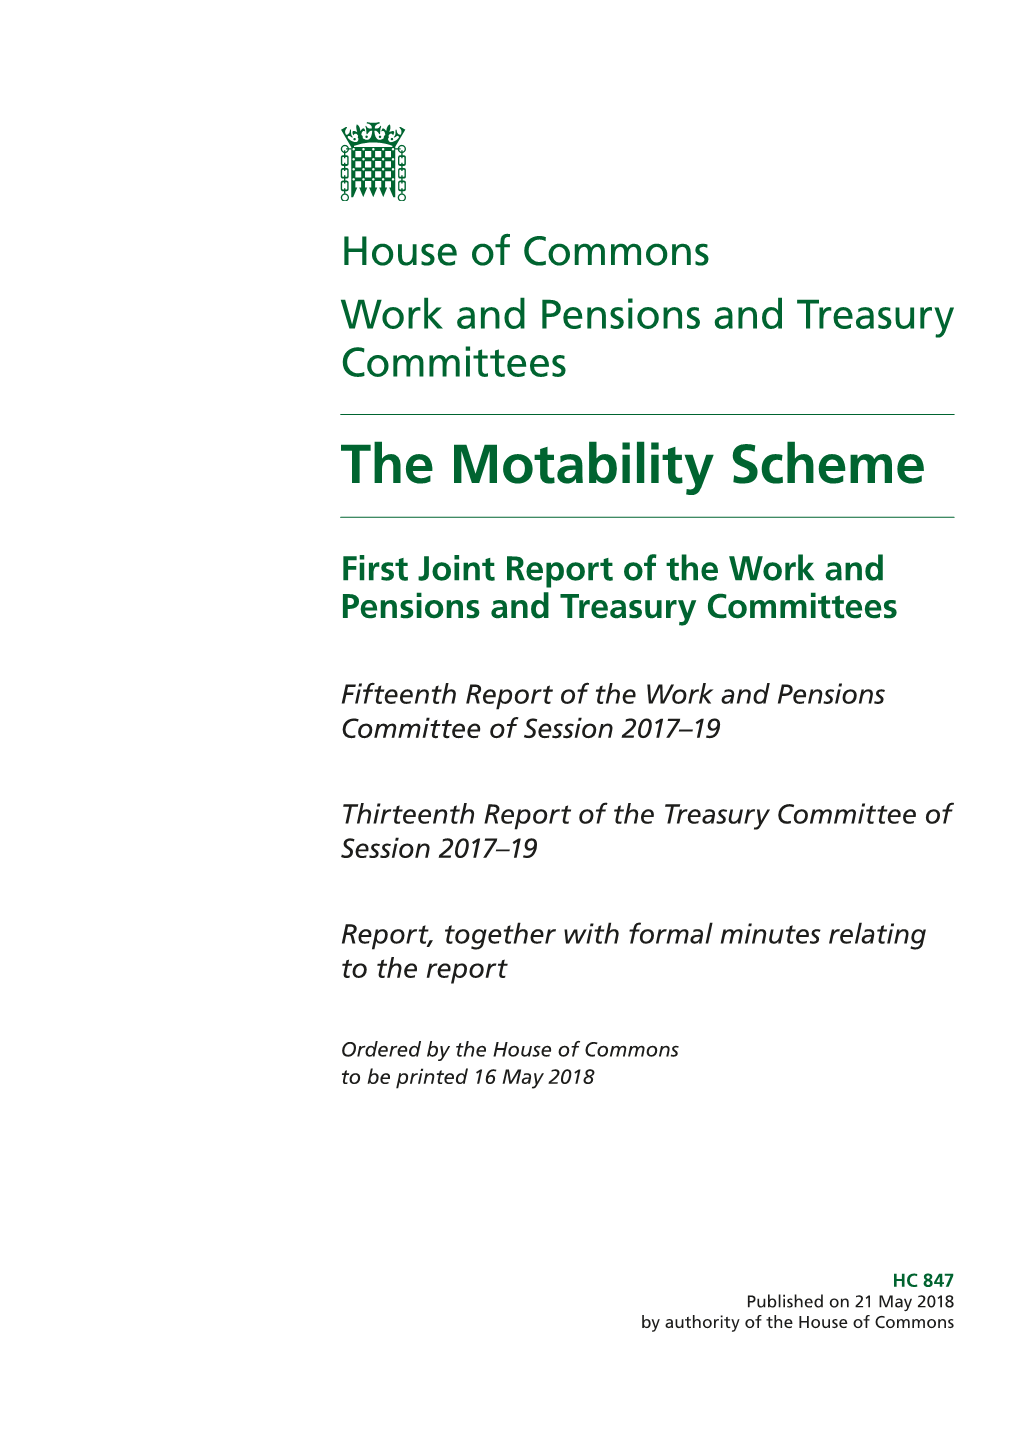 The Motability Scheme